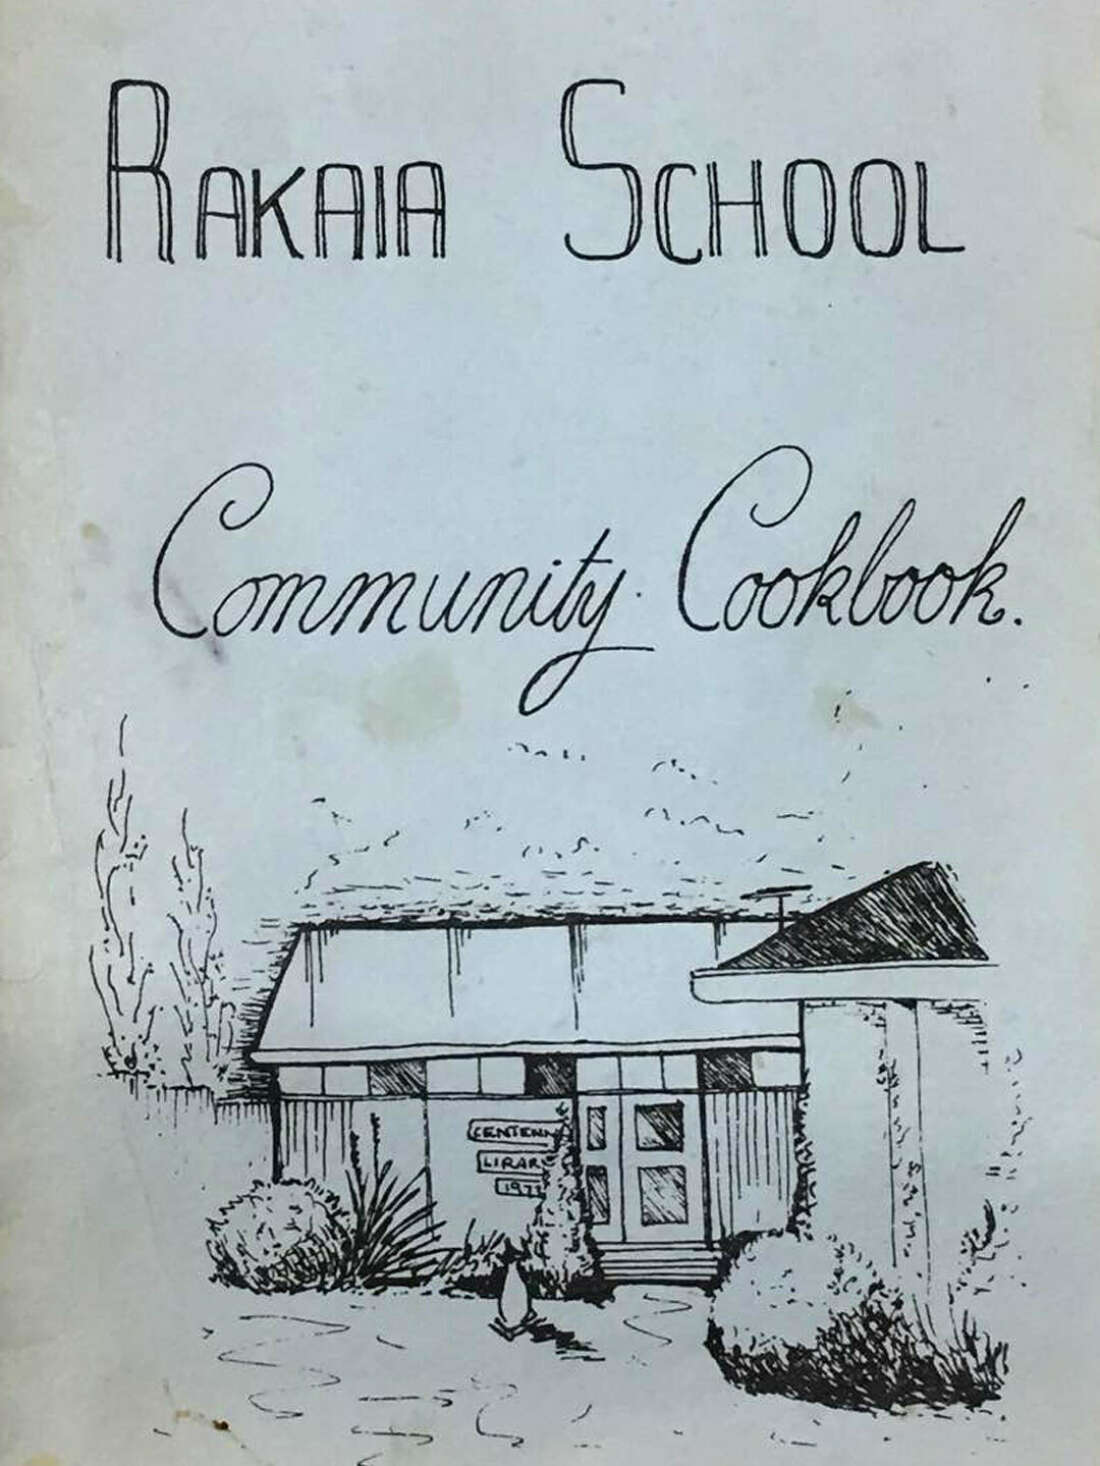 A return to community cookbooks